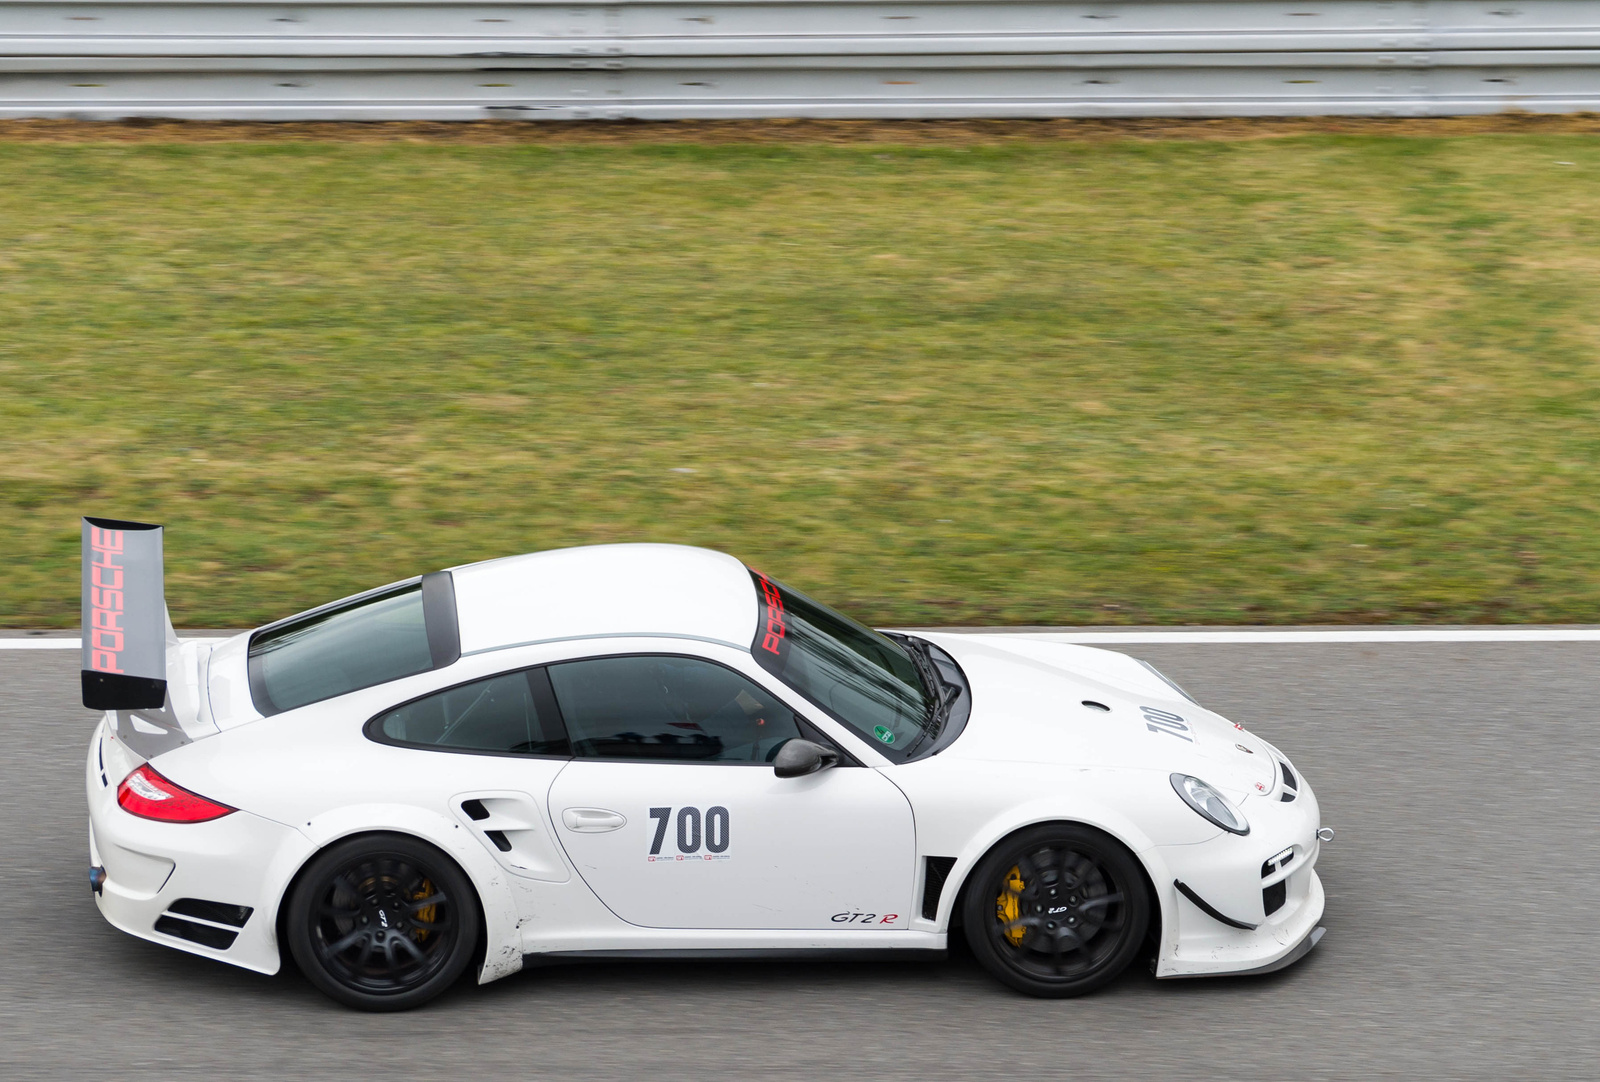 Porsche 911 "GT2 R"